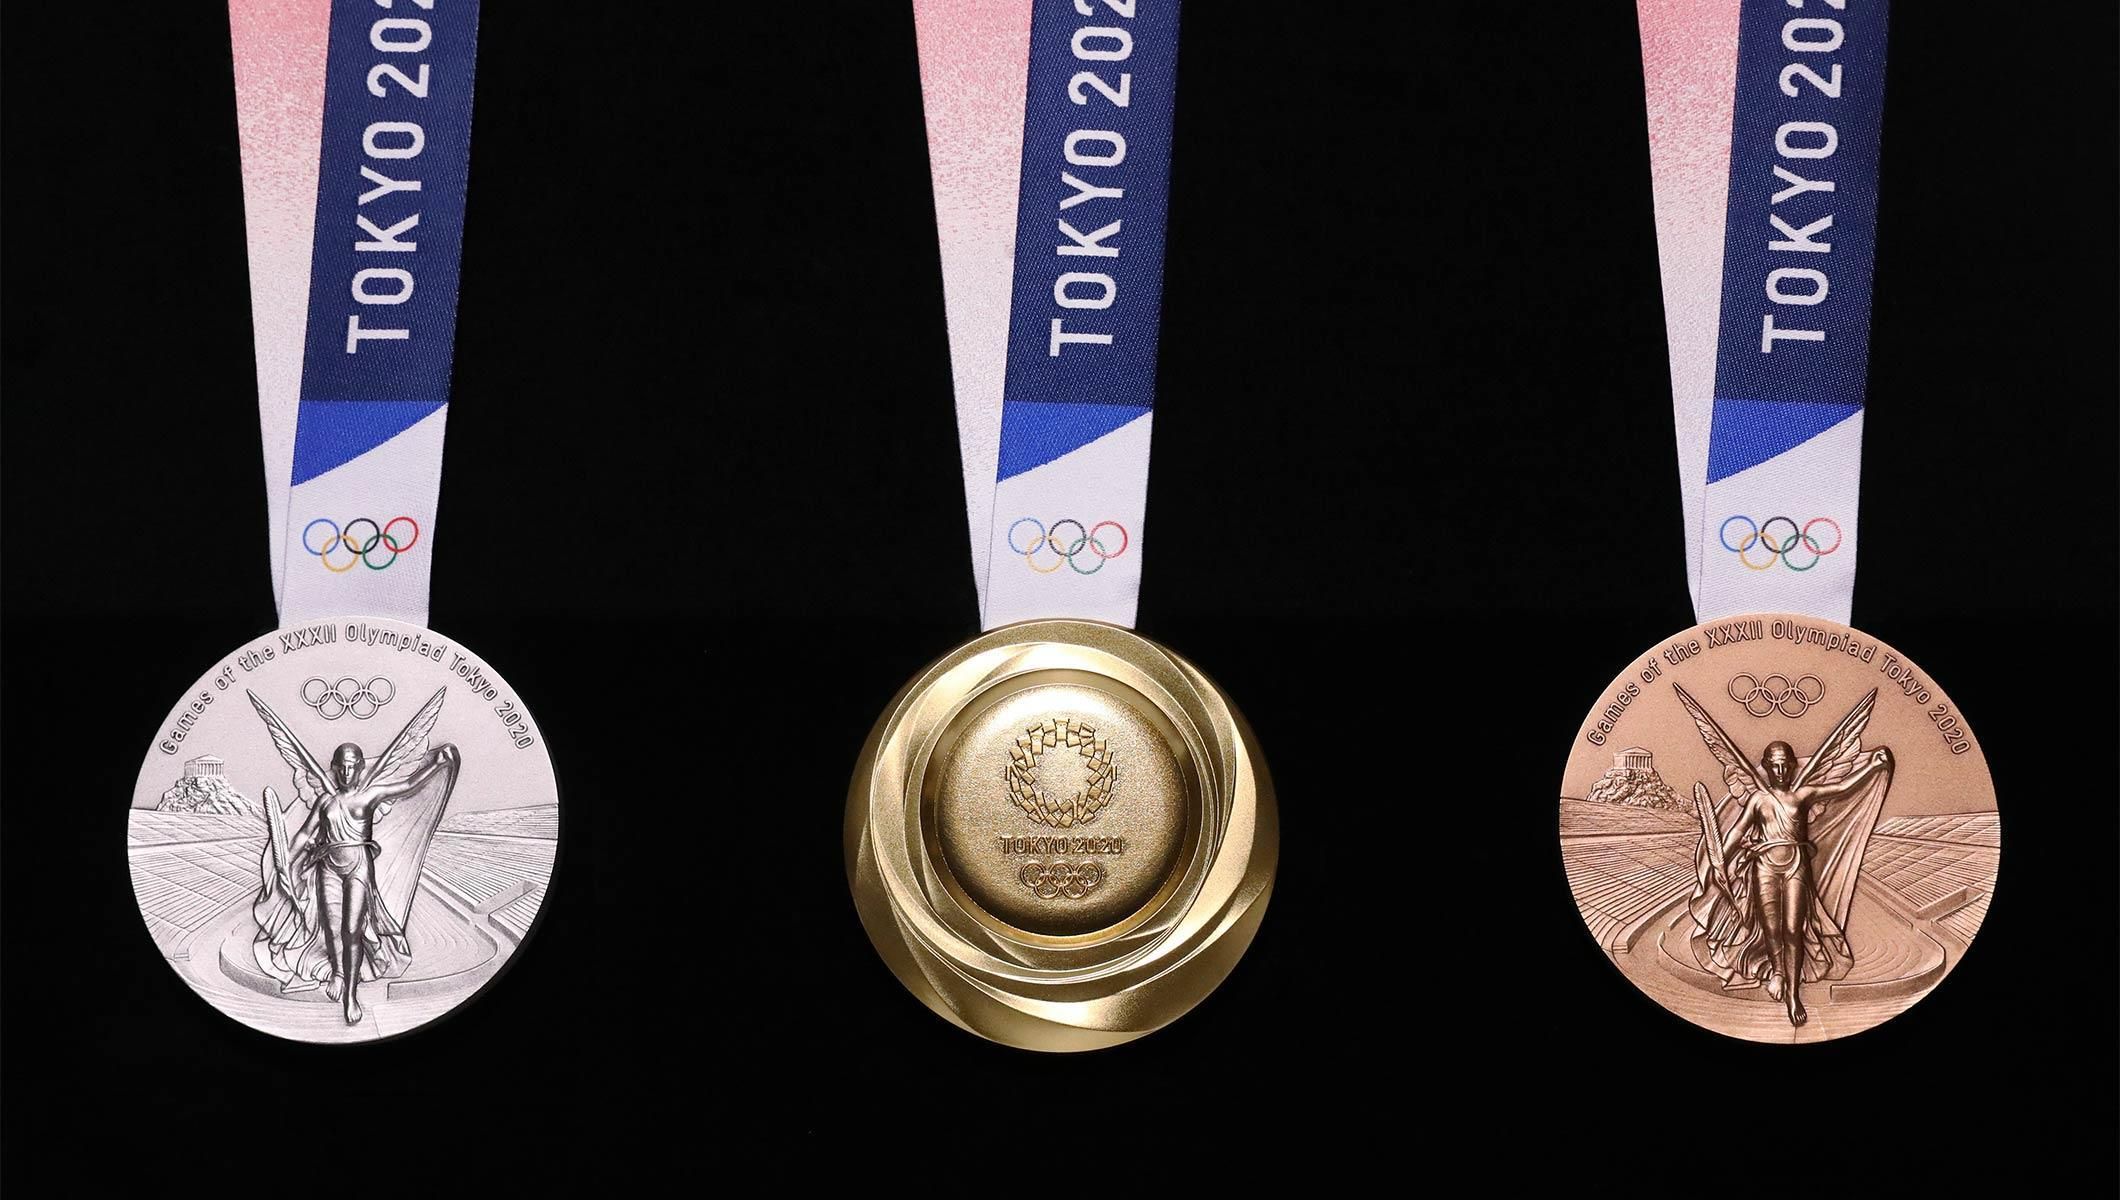 Олімпіада 2020: скільки зароблять українці в разі здобуття медалей